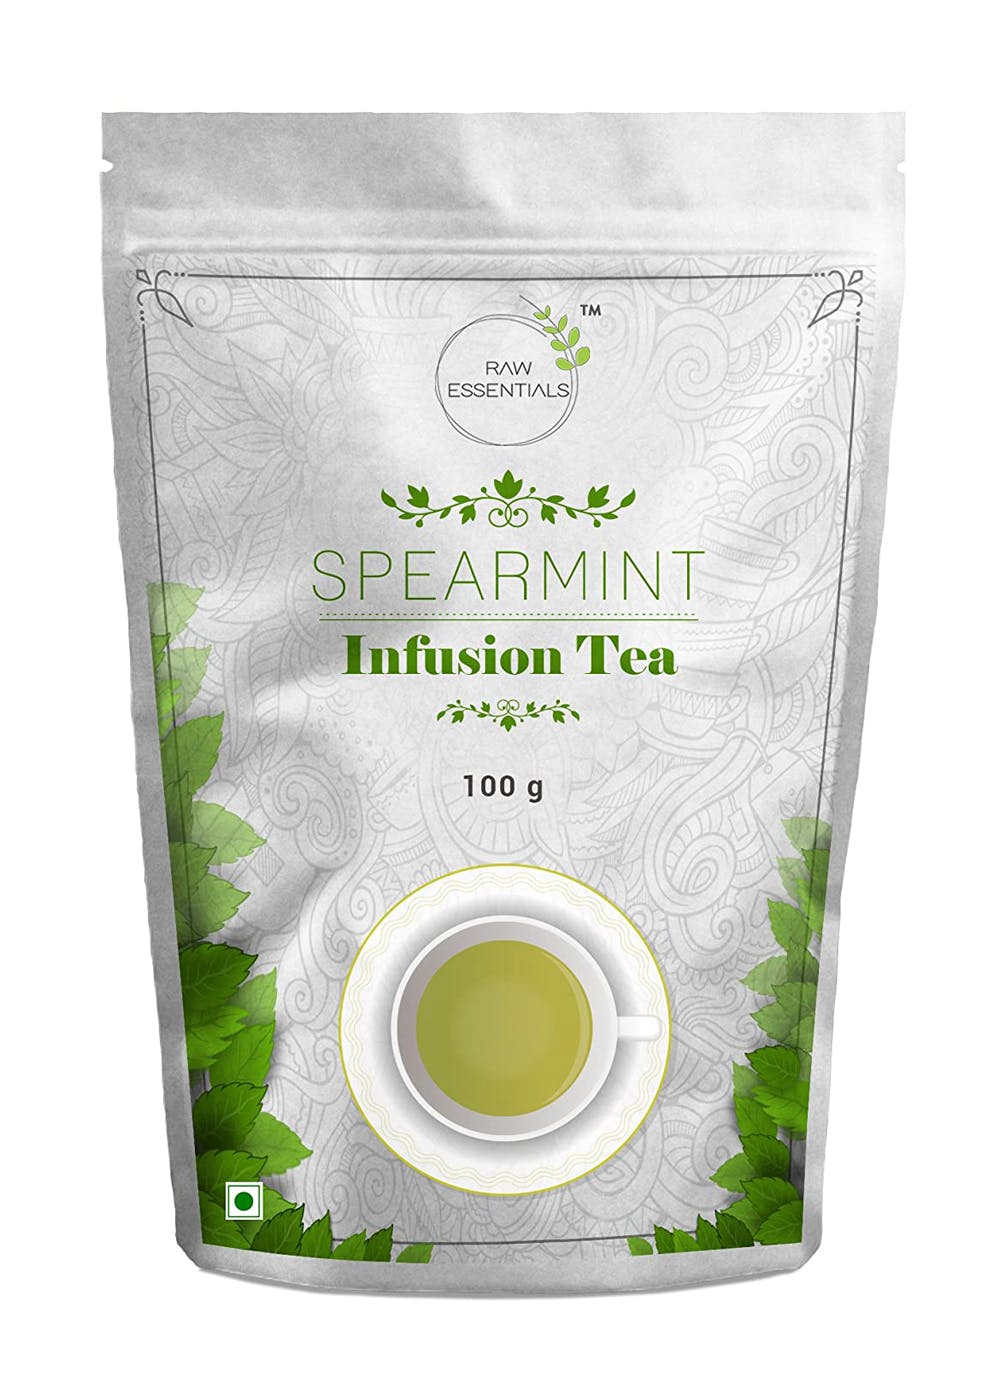 Spearmint Infusion Tea - 100g